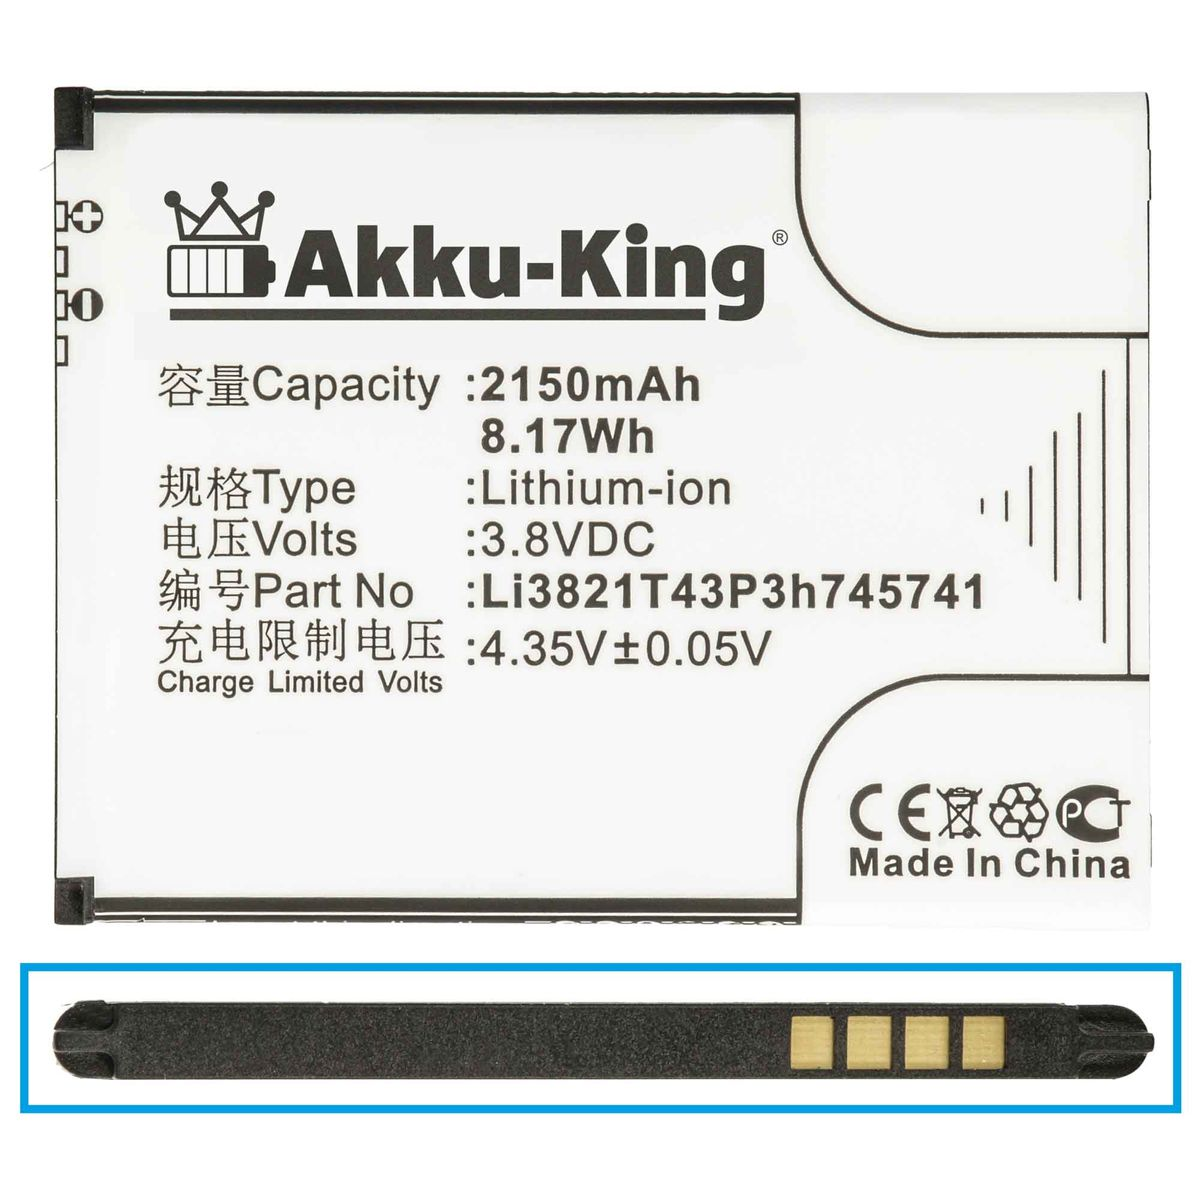 AKKU-KING Akku kompatibel Volt, Li3821T43P3h745741 ZTE 2150mAh 3.8 Li-Ion Handy-Akku, mit